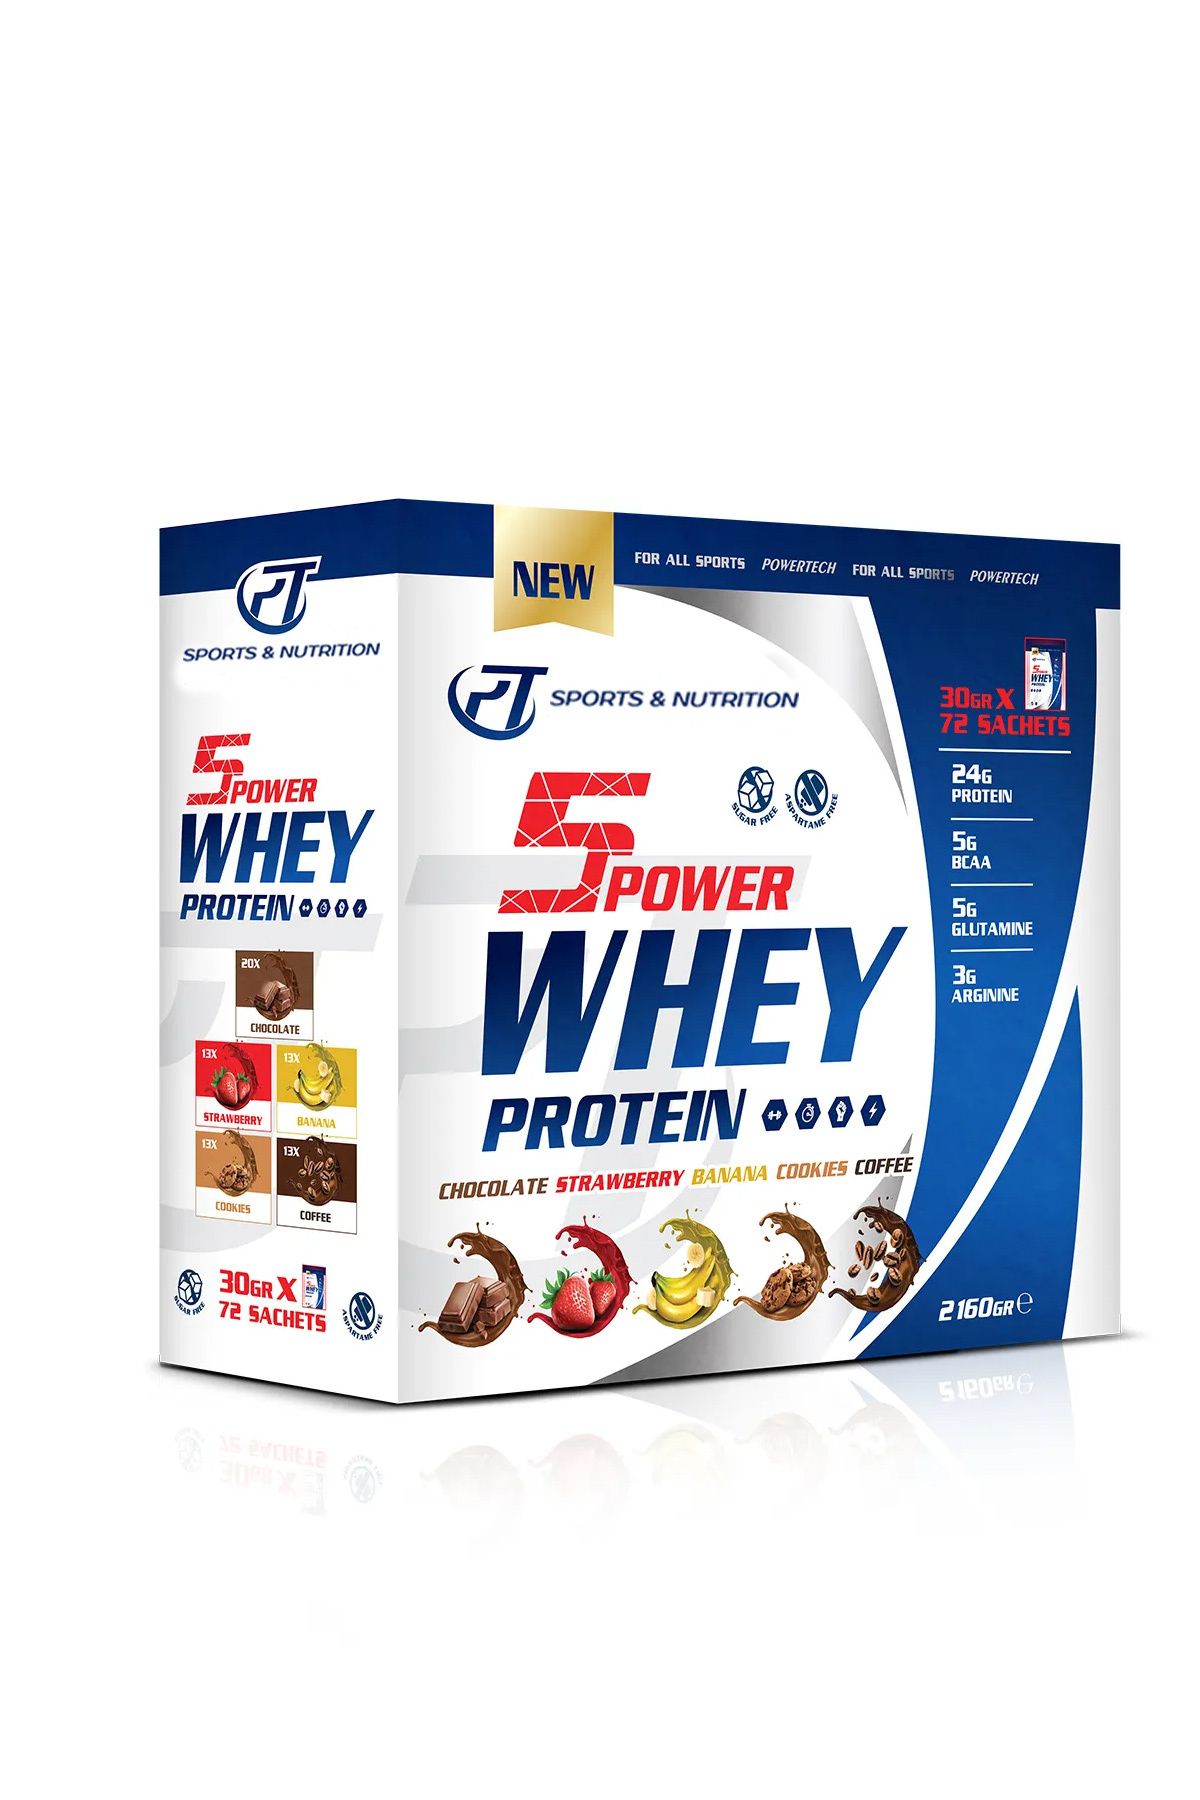 POWERTECH 5Power Whey Protein 30grx72 Sachets 2160 gr Mix